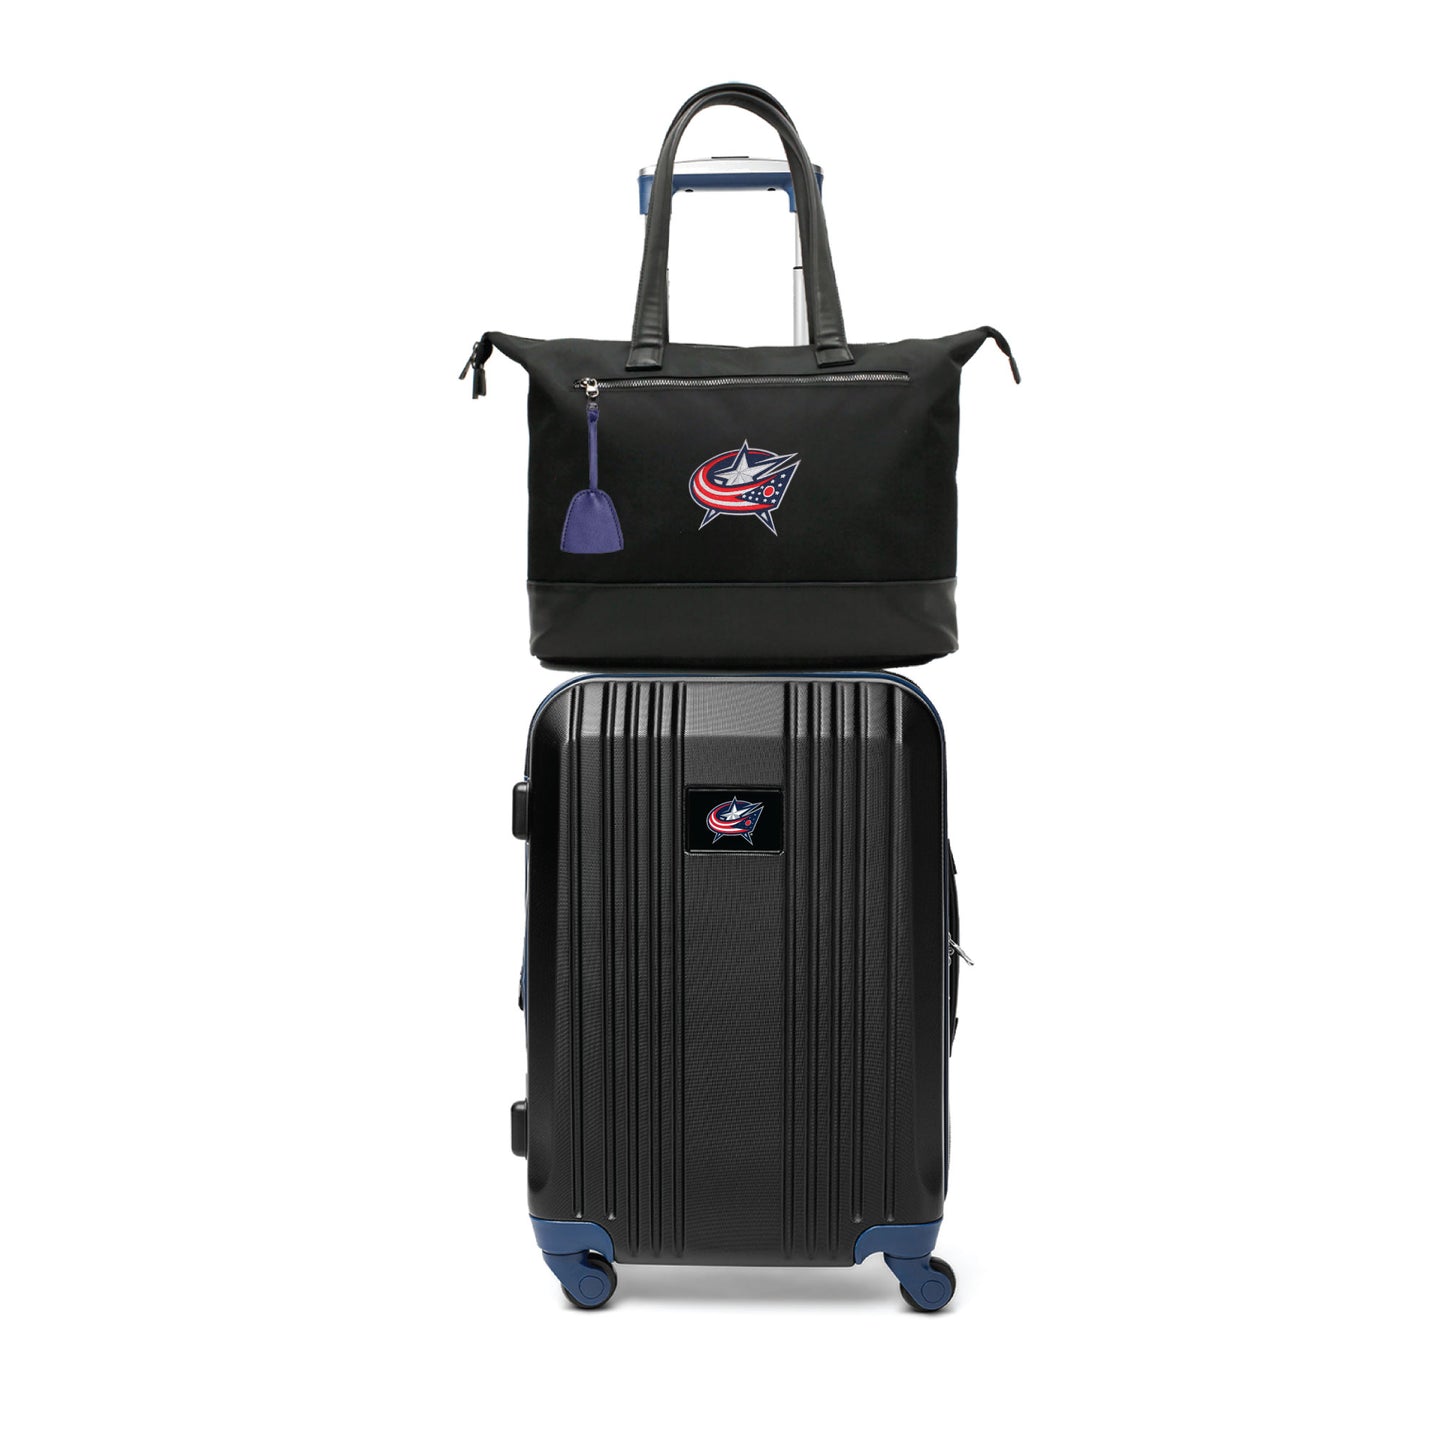 Columbus Blue Jackets Premium Laptop Tote Bag and Luggage Set